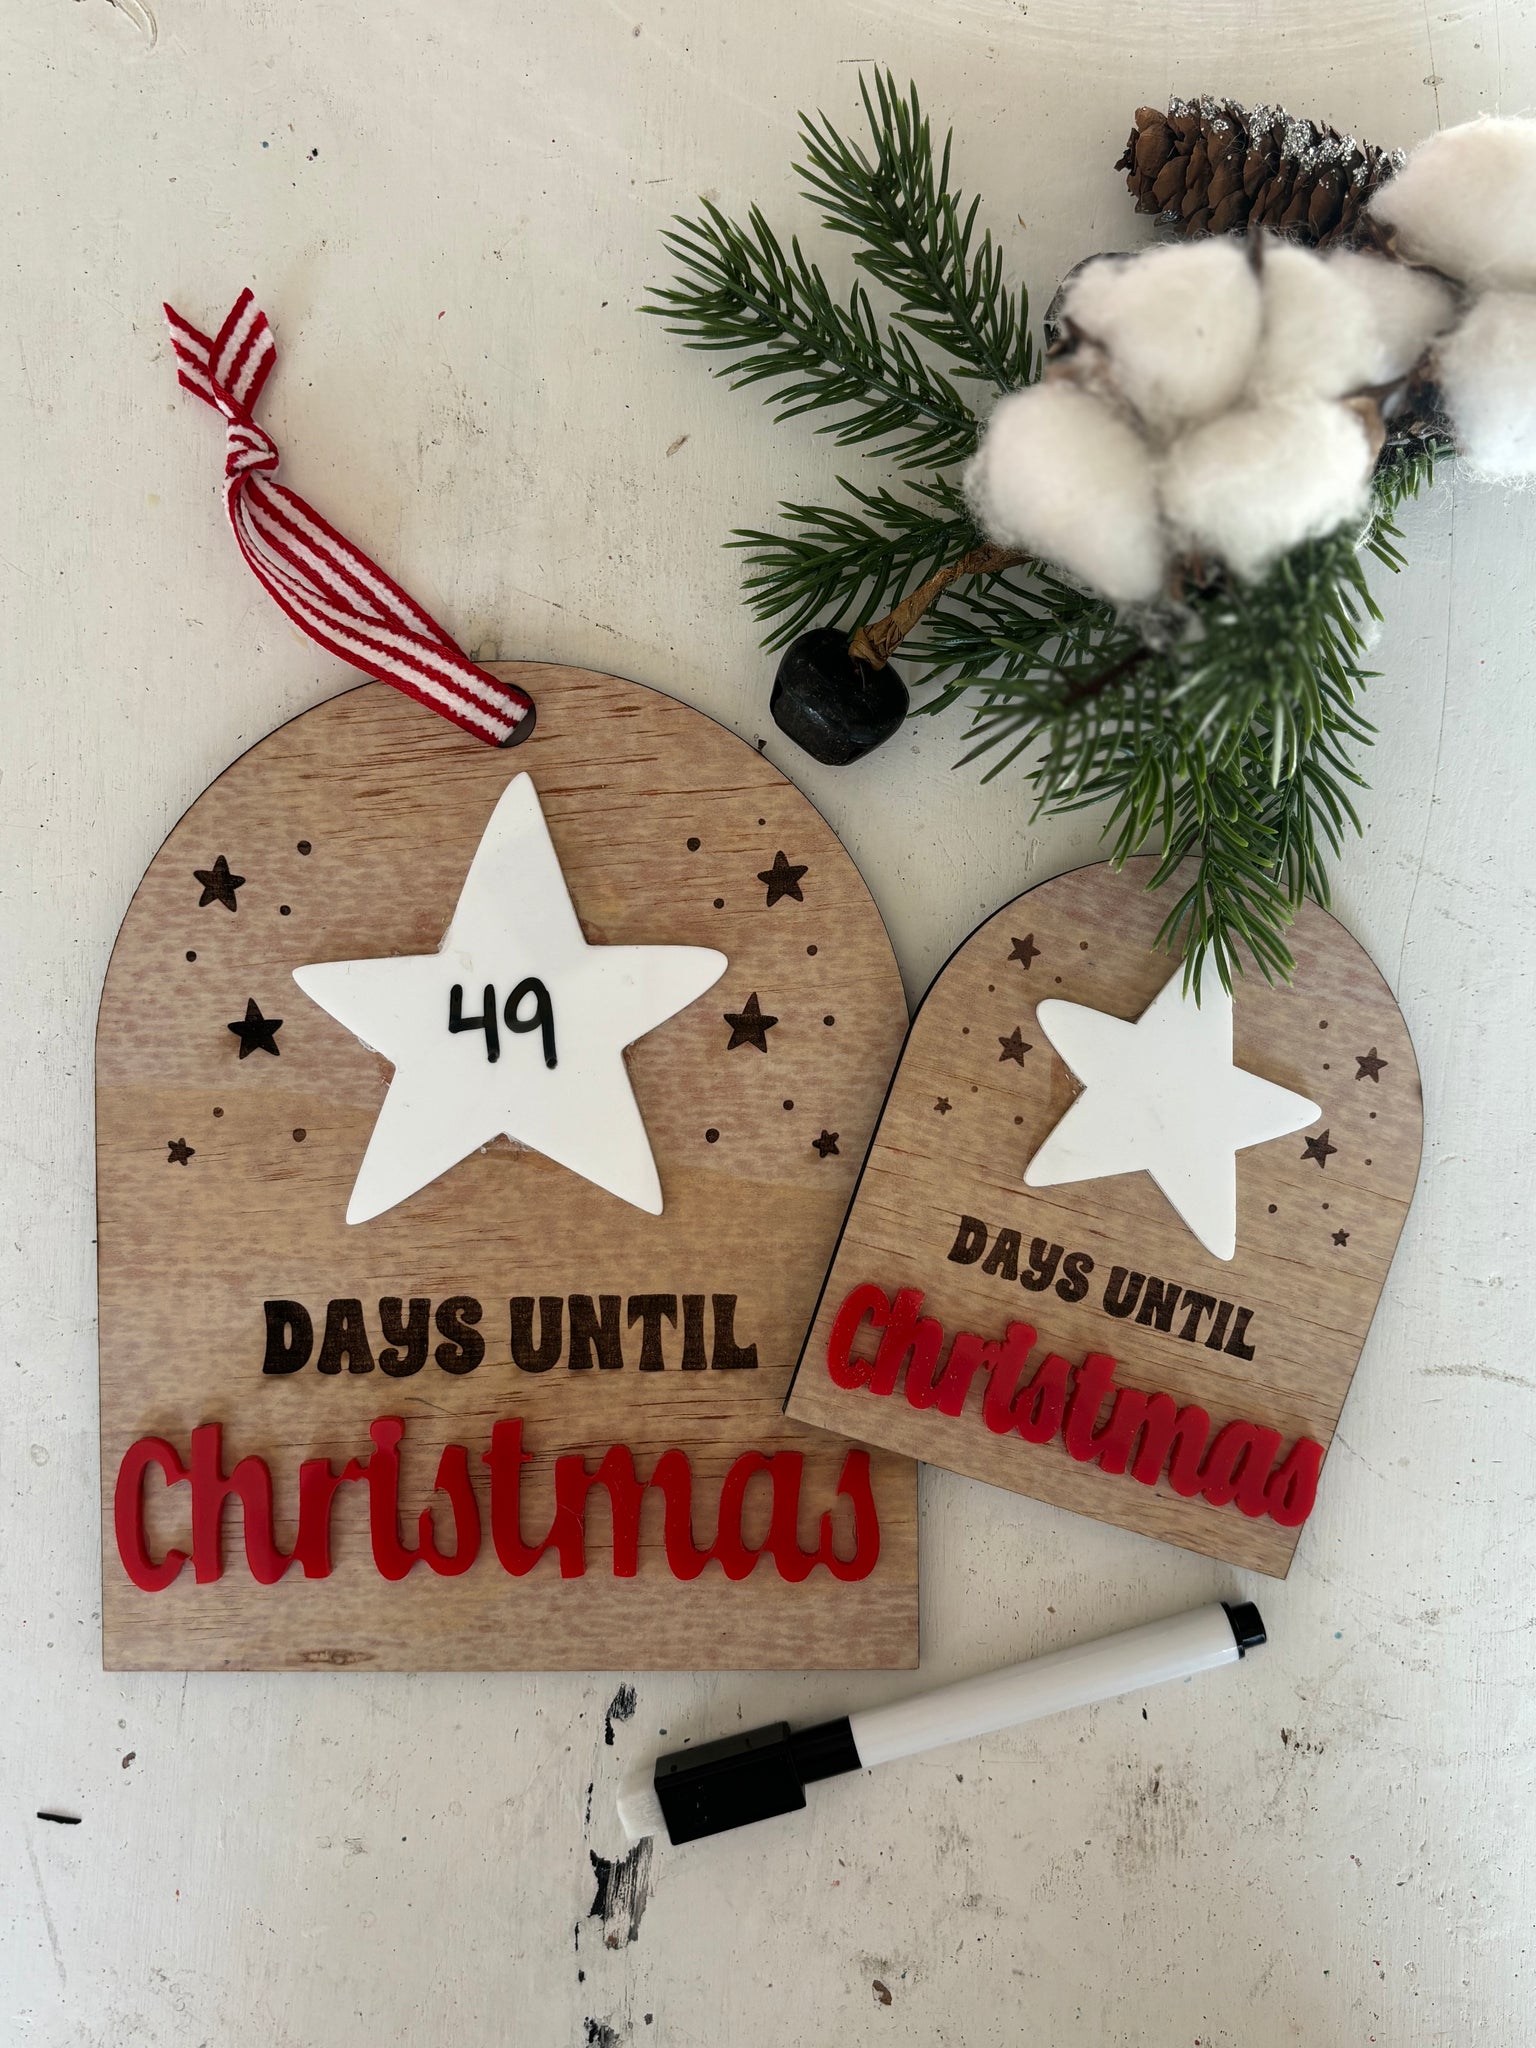 Countdown to Christmas sign